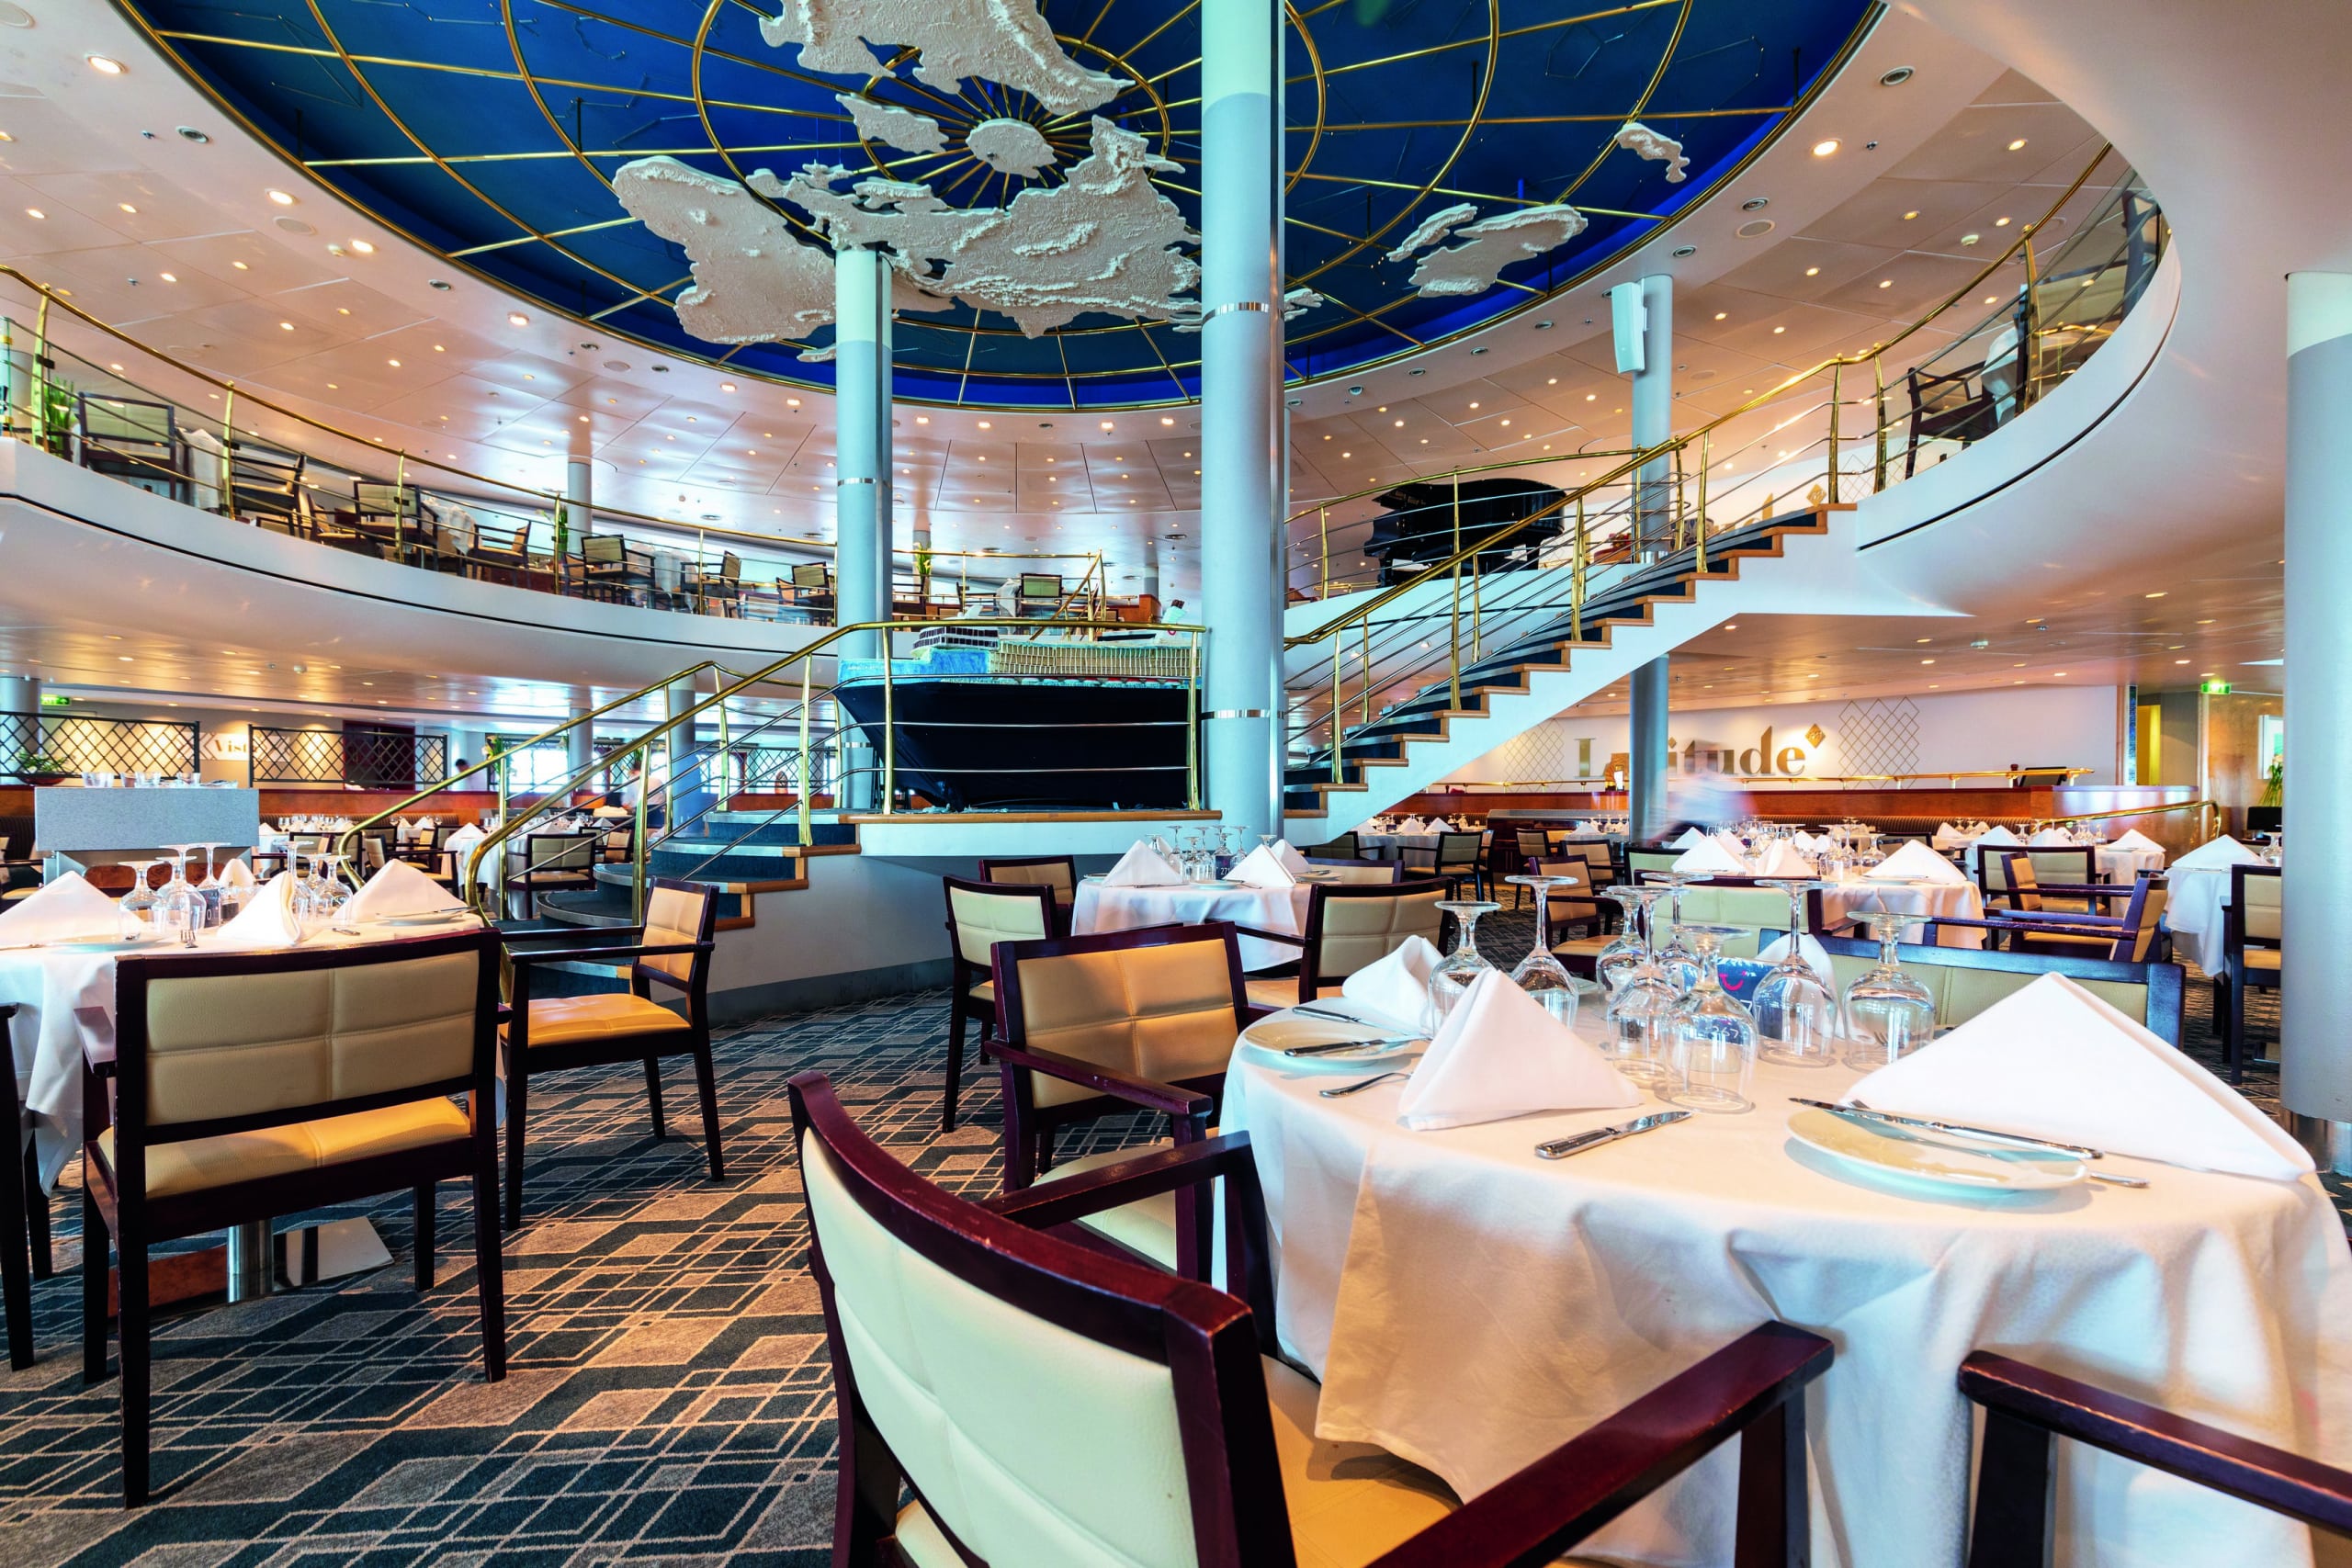 Sailawaze UK Marella Cruises What’s onboard Marella Voyager cruise ship?